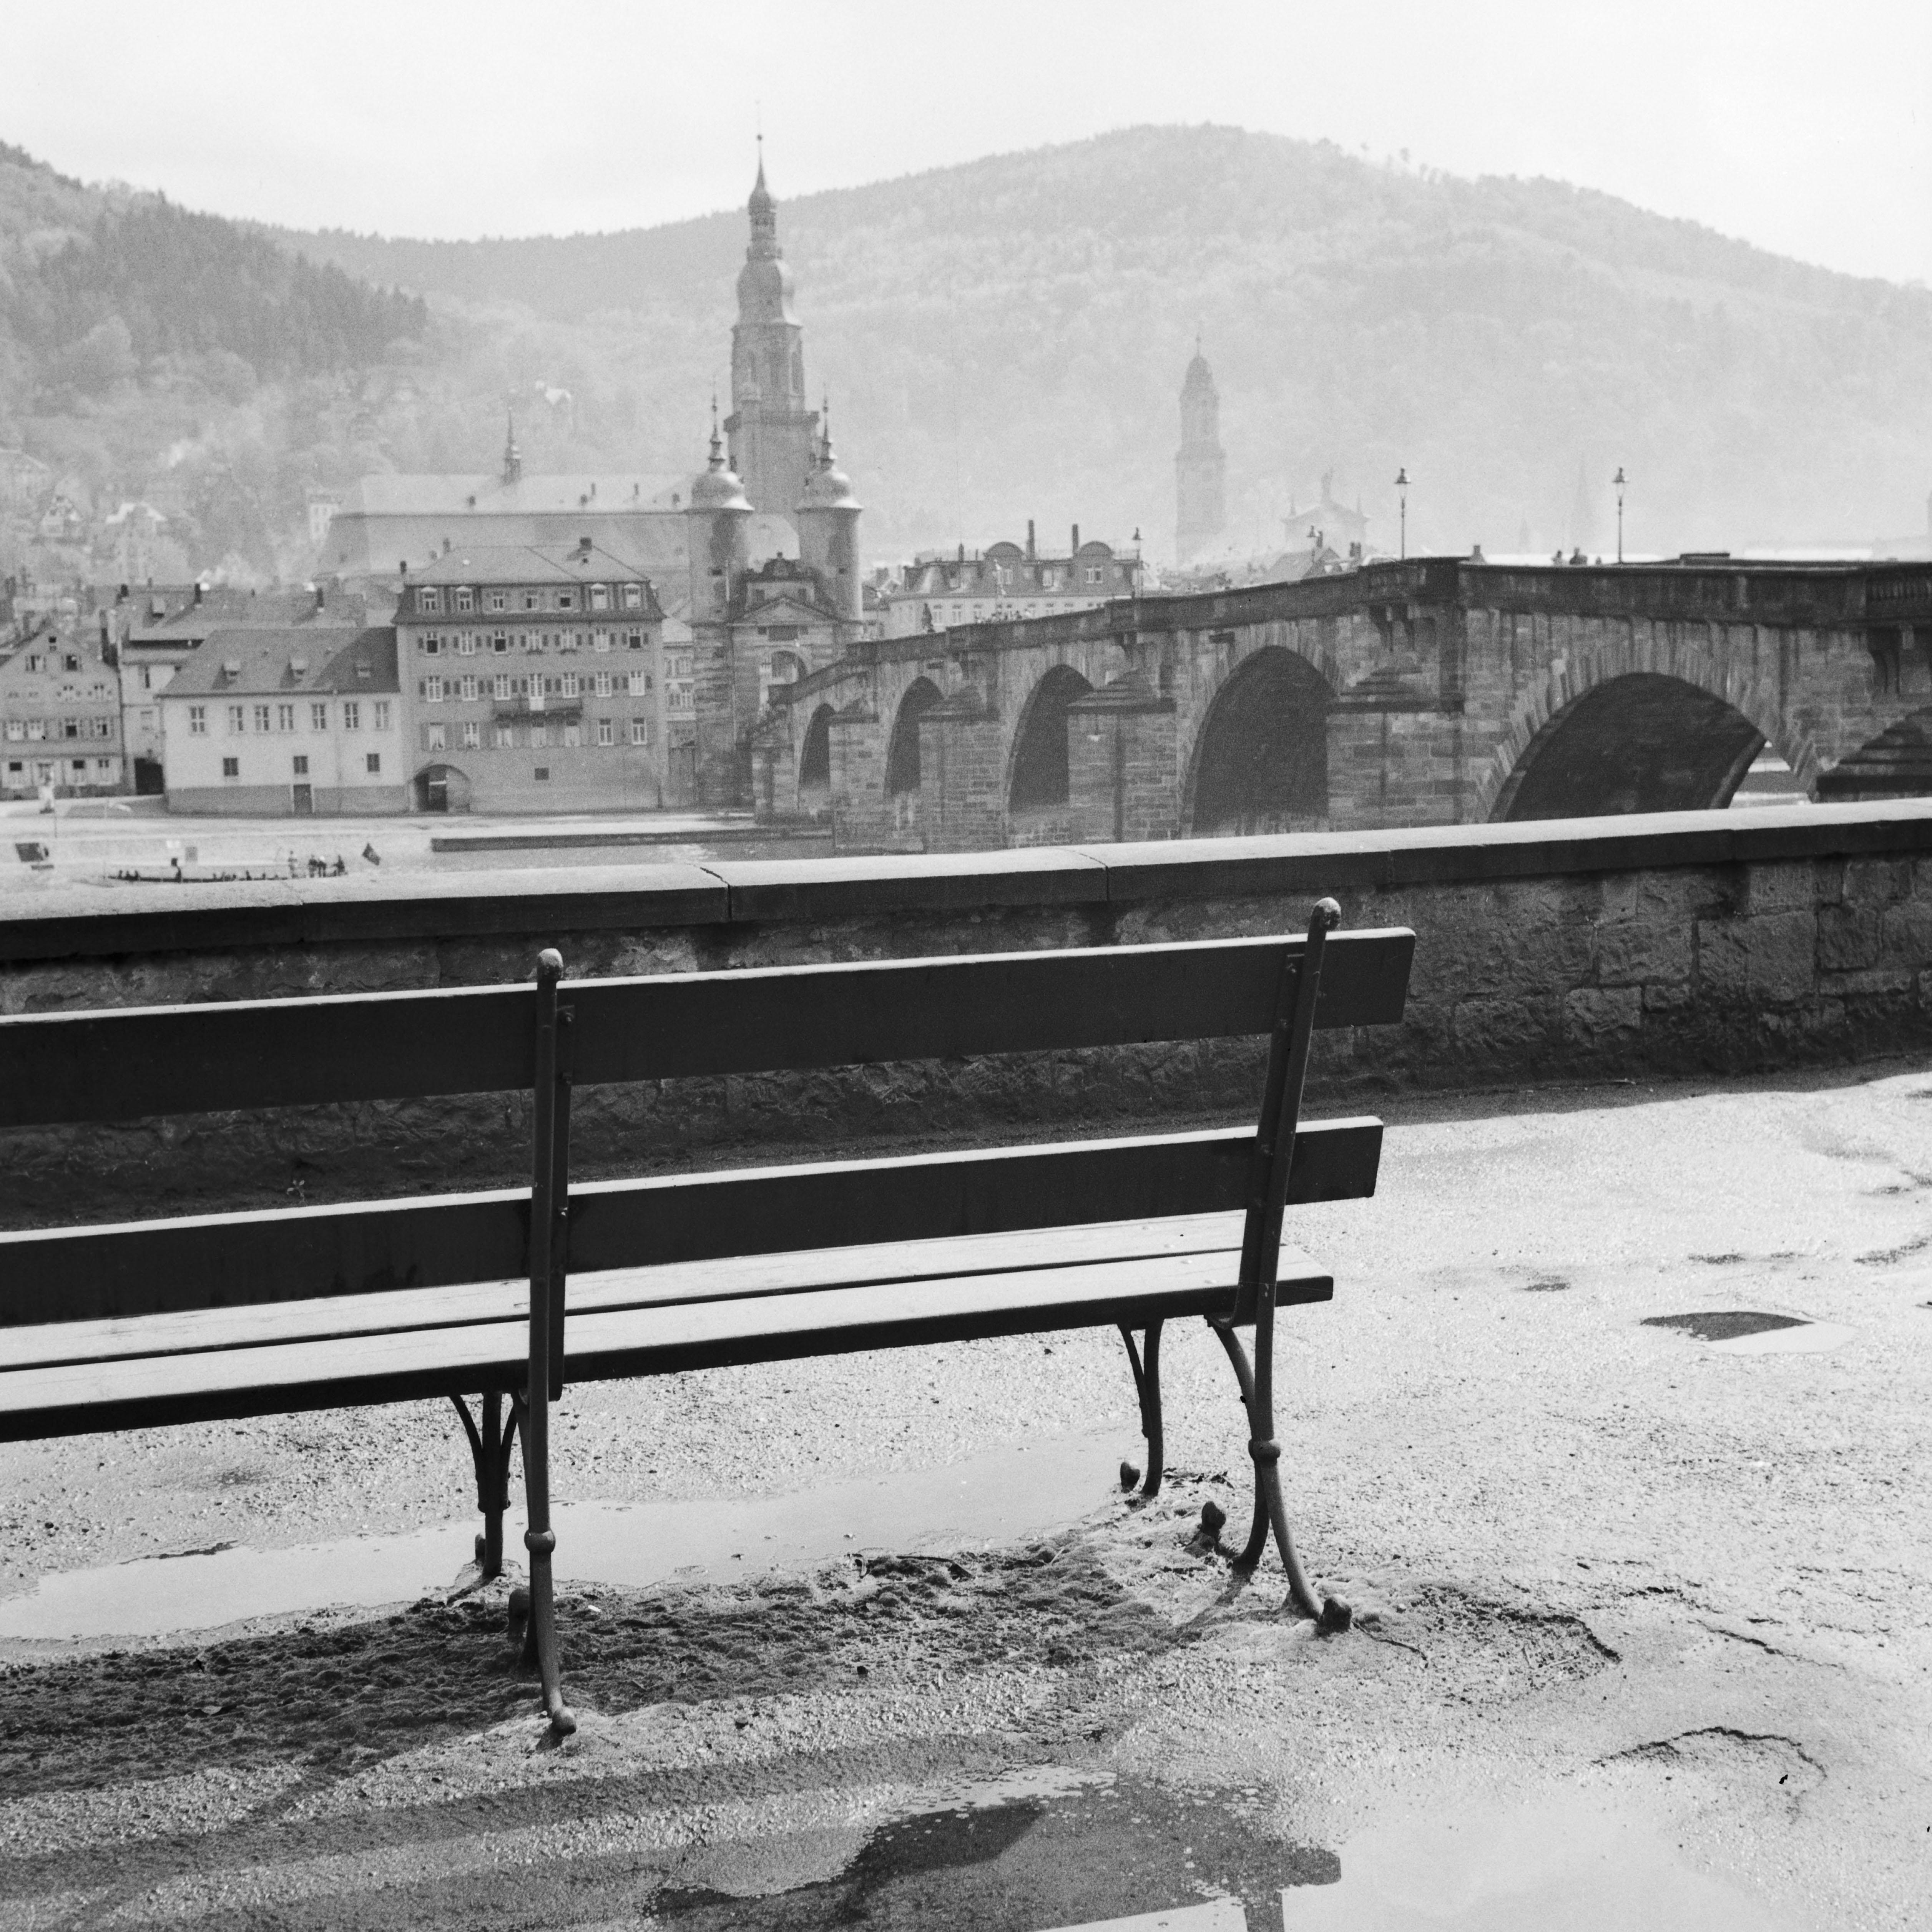 Karl Heinrich Lämmel Black and White Photograph - River Neckar, old bridge, church, Heidelberg Germany 1936, Printed Later 